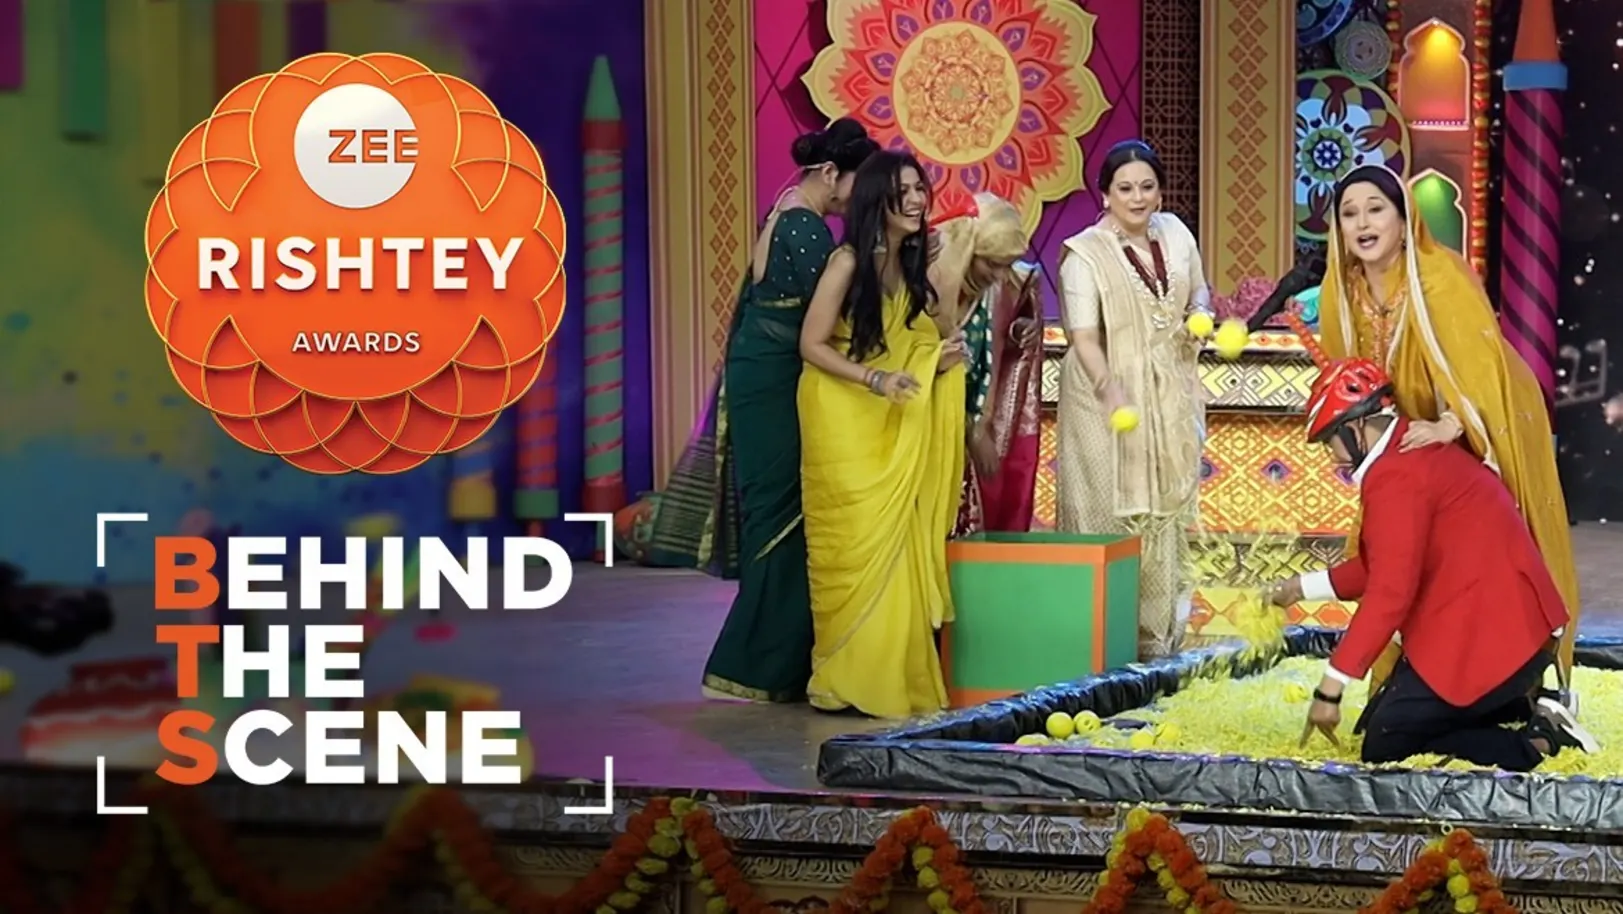 A Lot of Fungama on Stage | Behind The Scenes | Zee Rishtey Awards – Khana, Gaana aur Fungama 